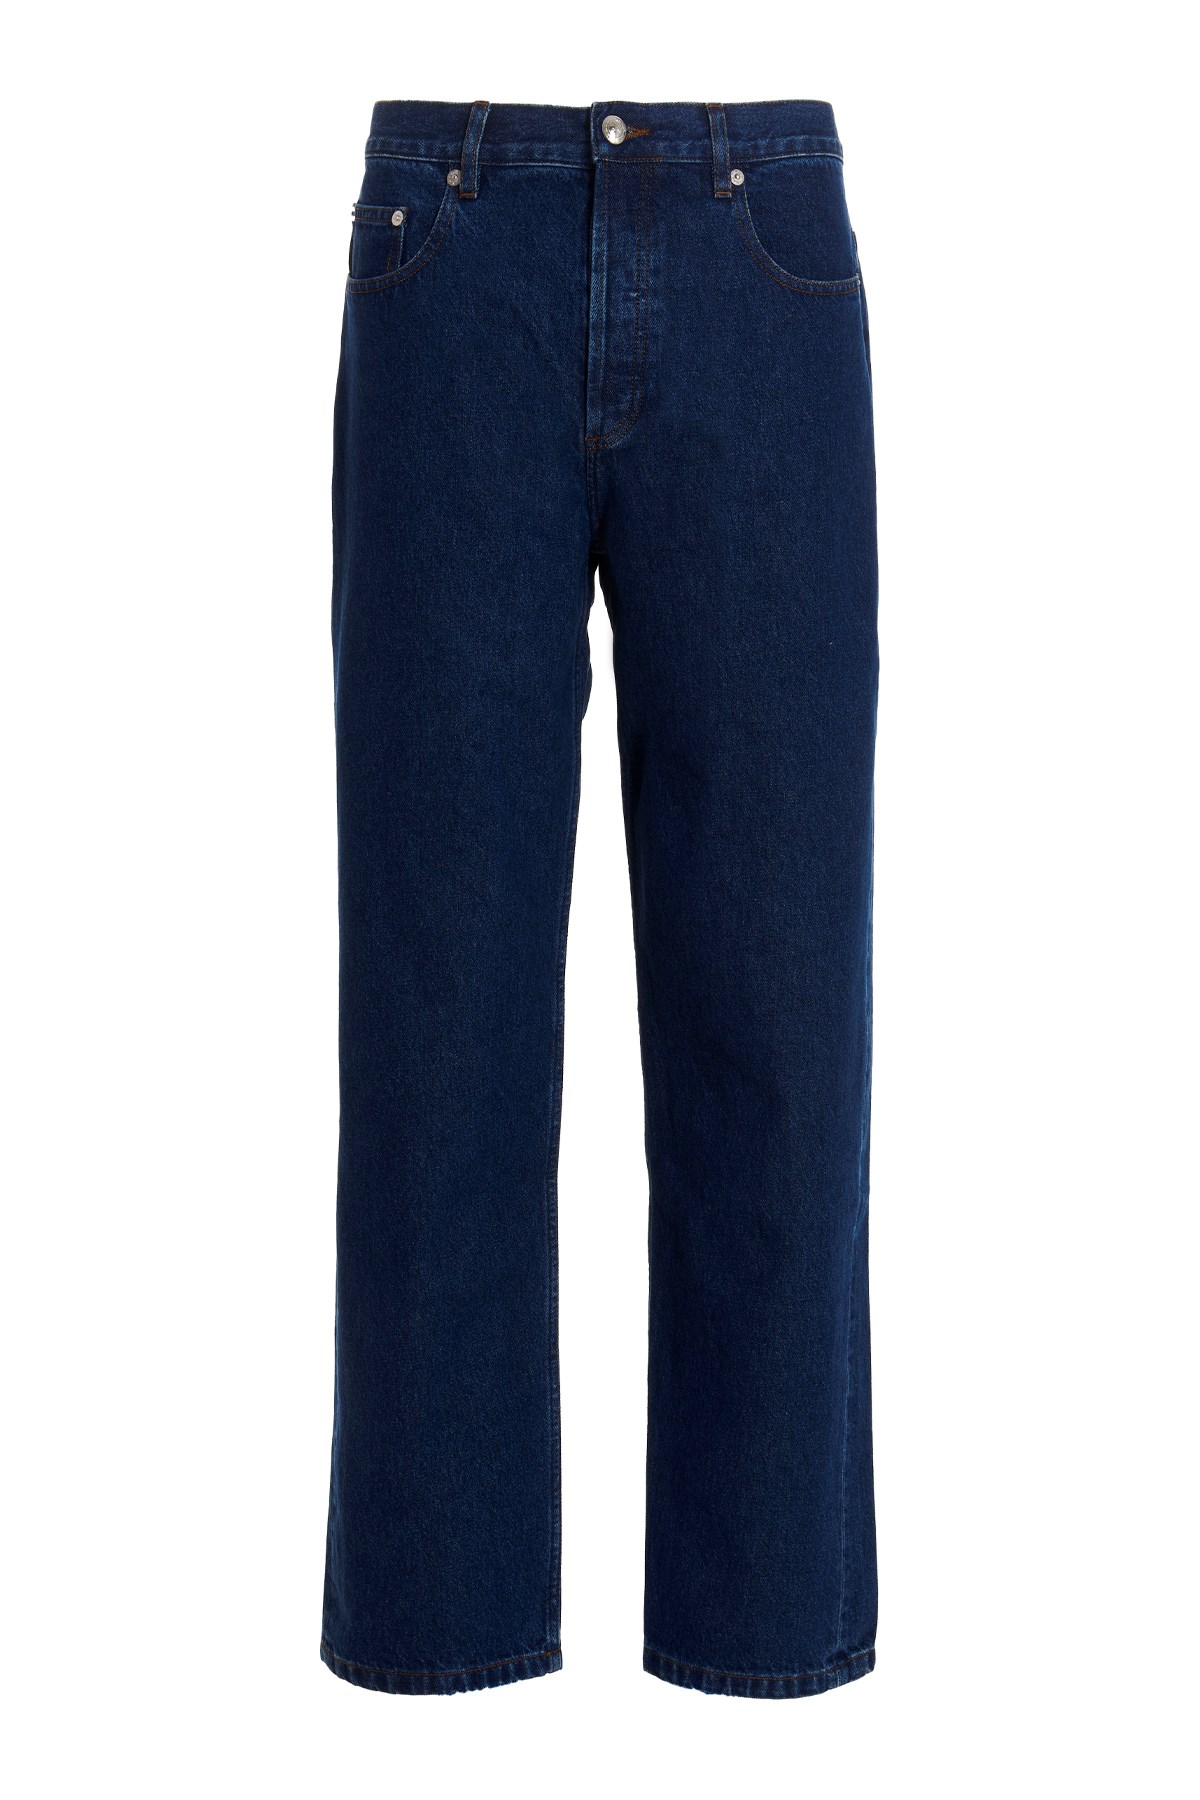 A.P.C. 'Fairfax’ Jeans